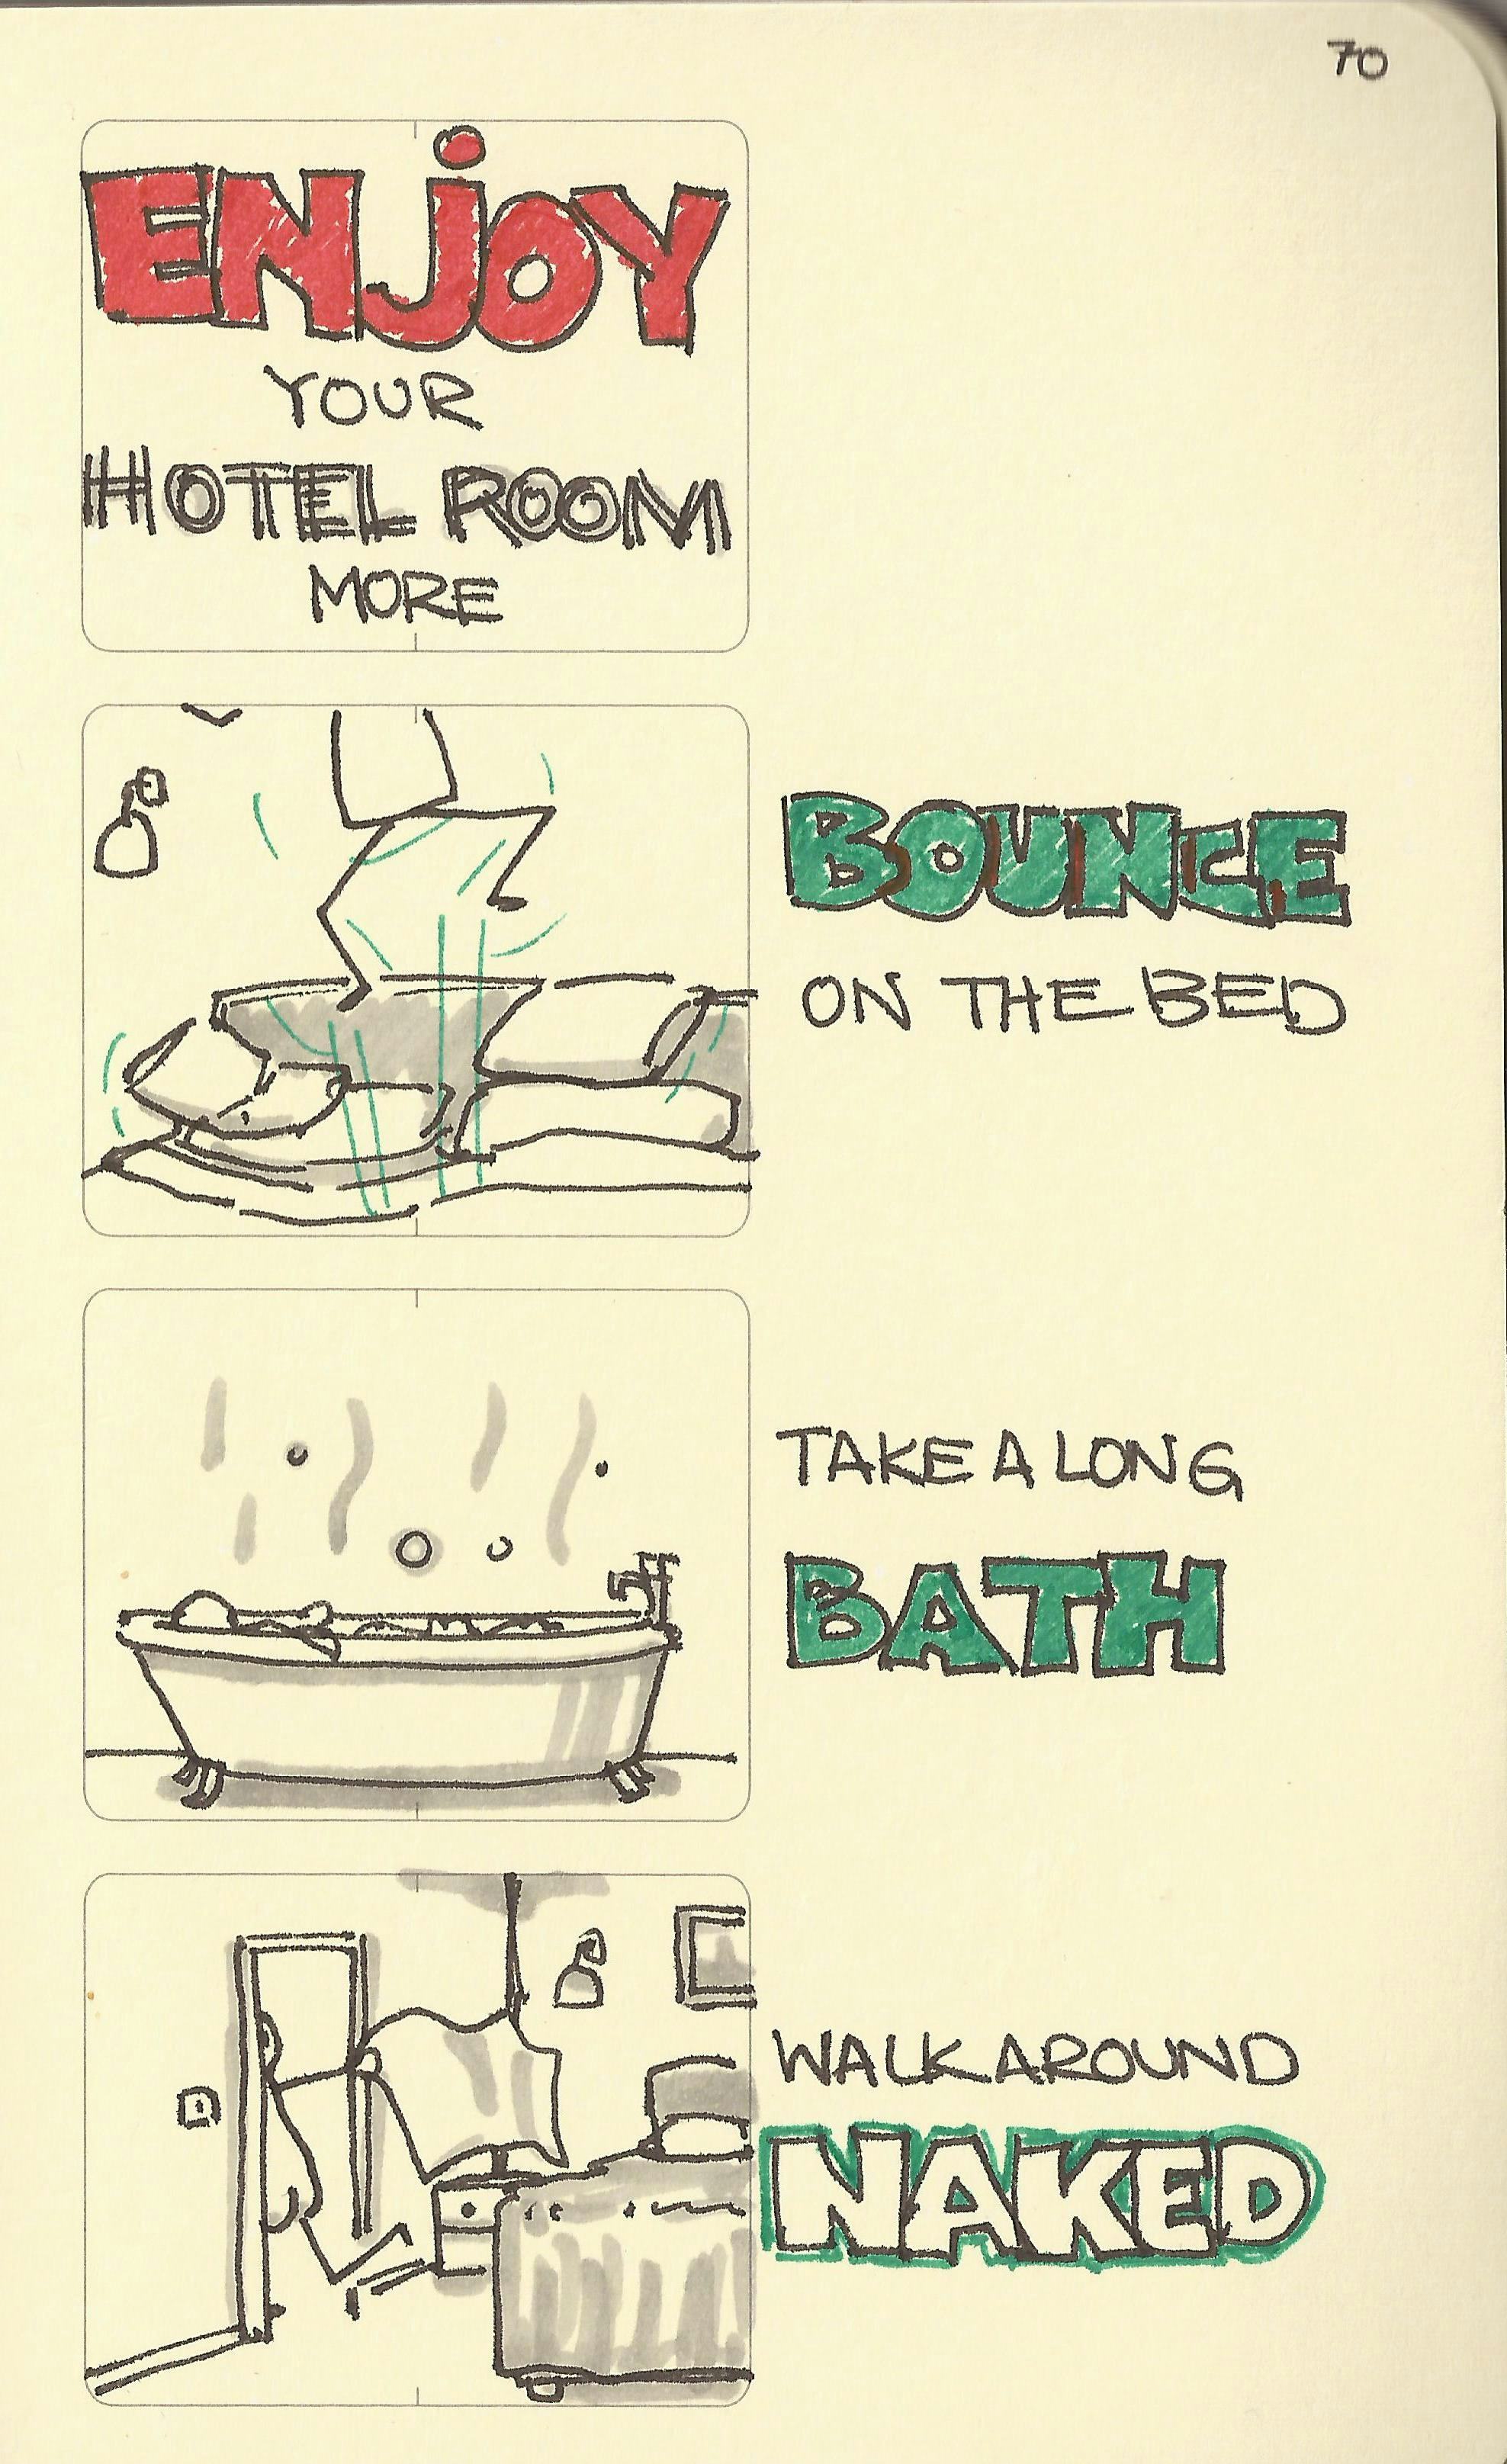 Enjoy your hotel room more - Sketchplanations